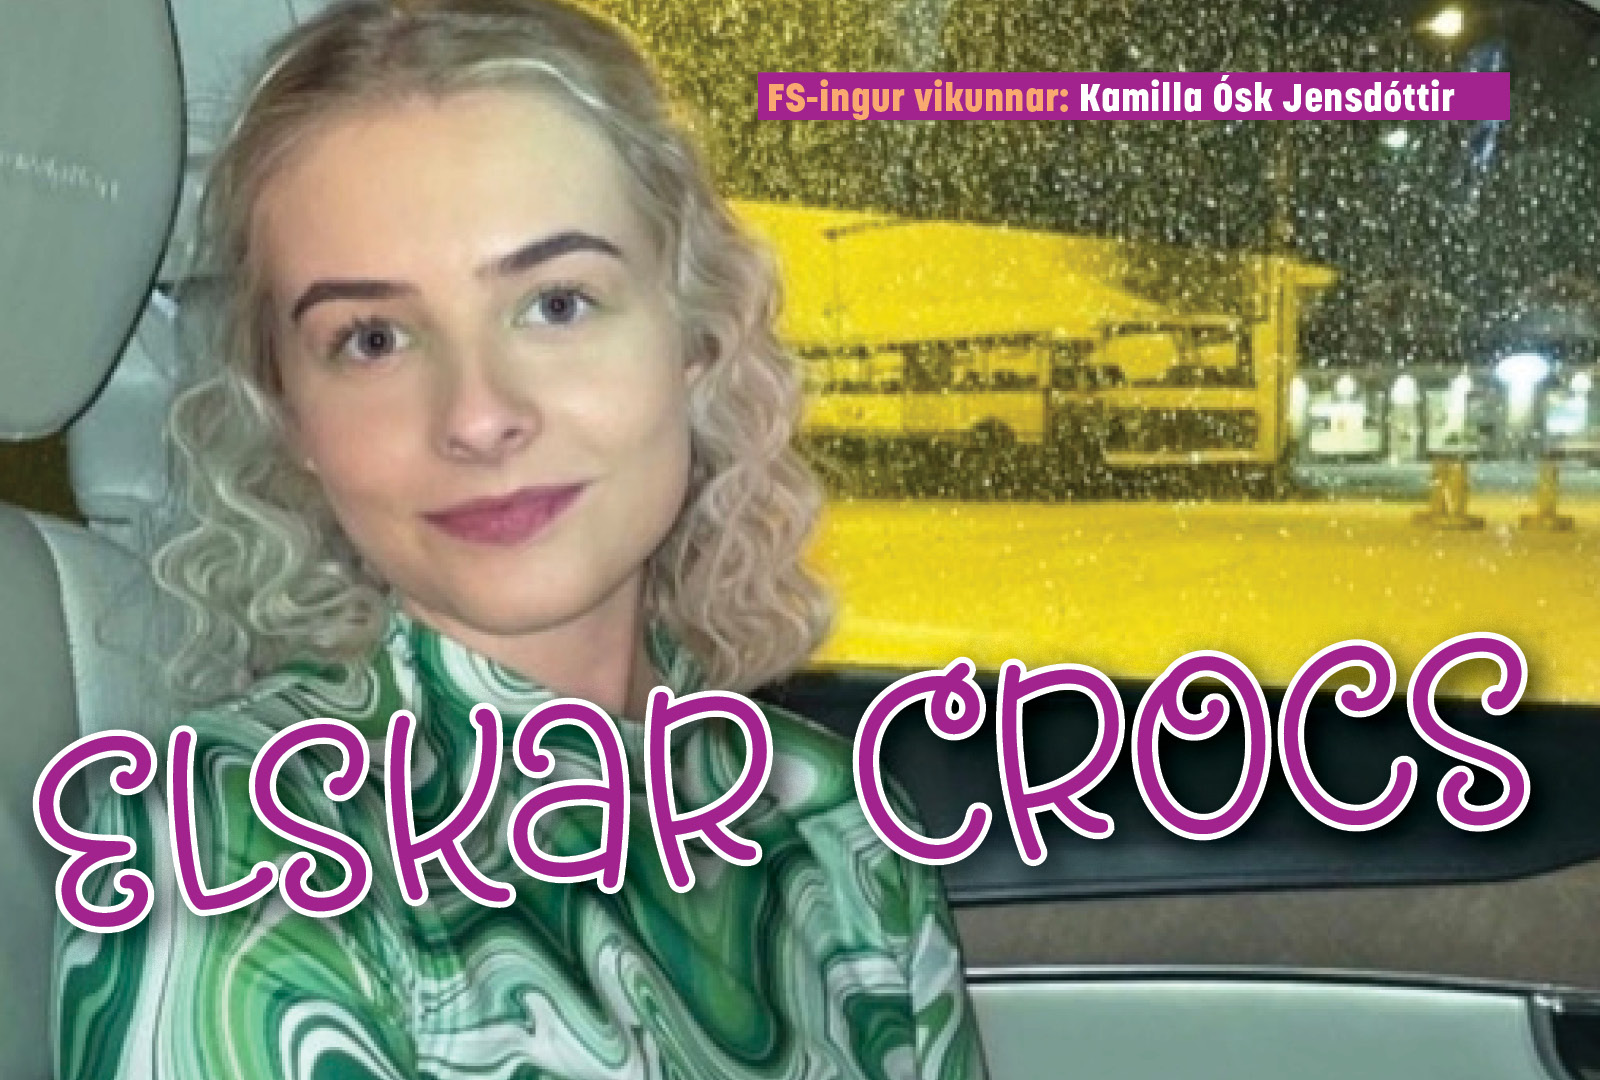 FS-ingur vikunnar: Elskar Crocs